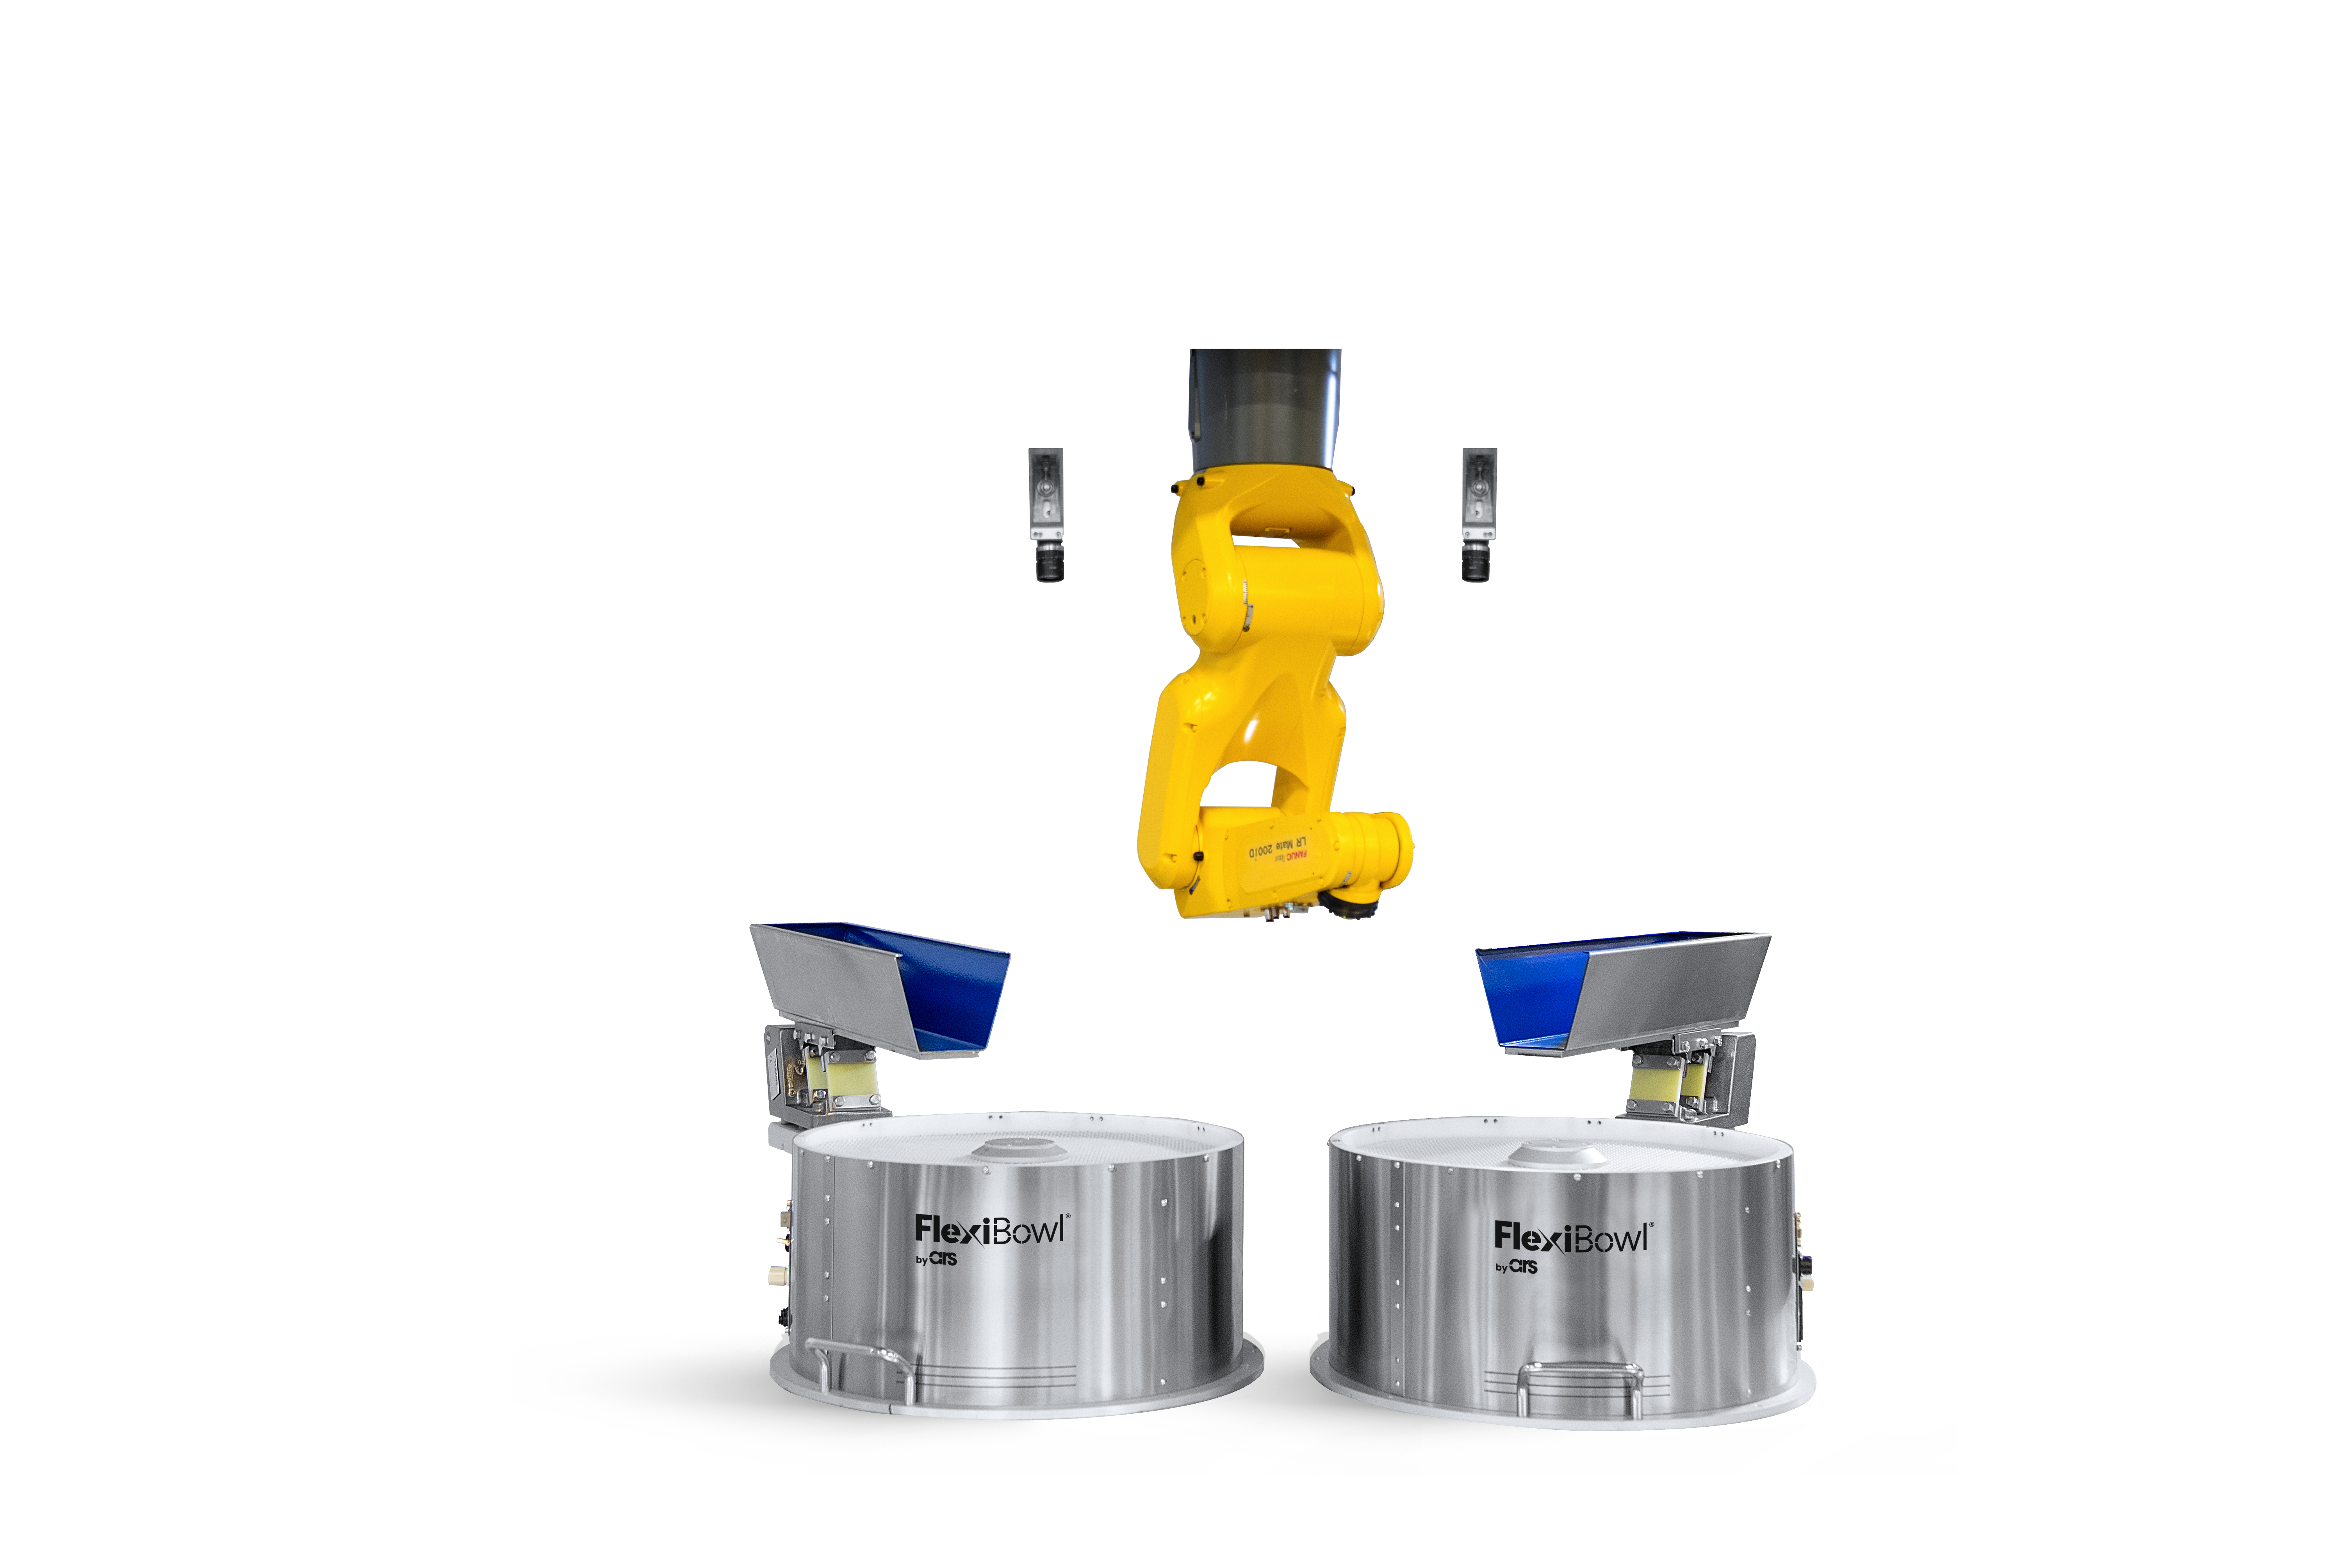 fanuc robot feeding parts